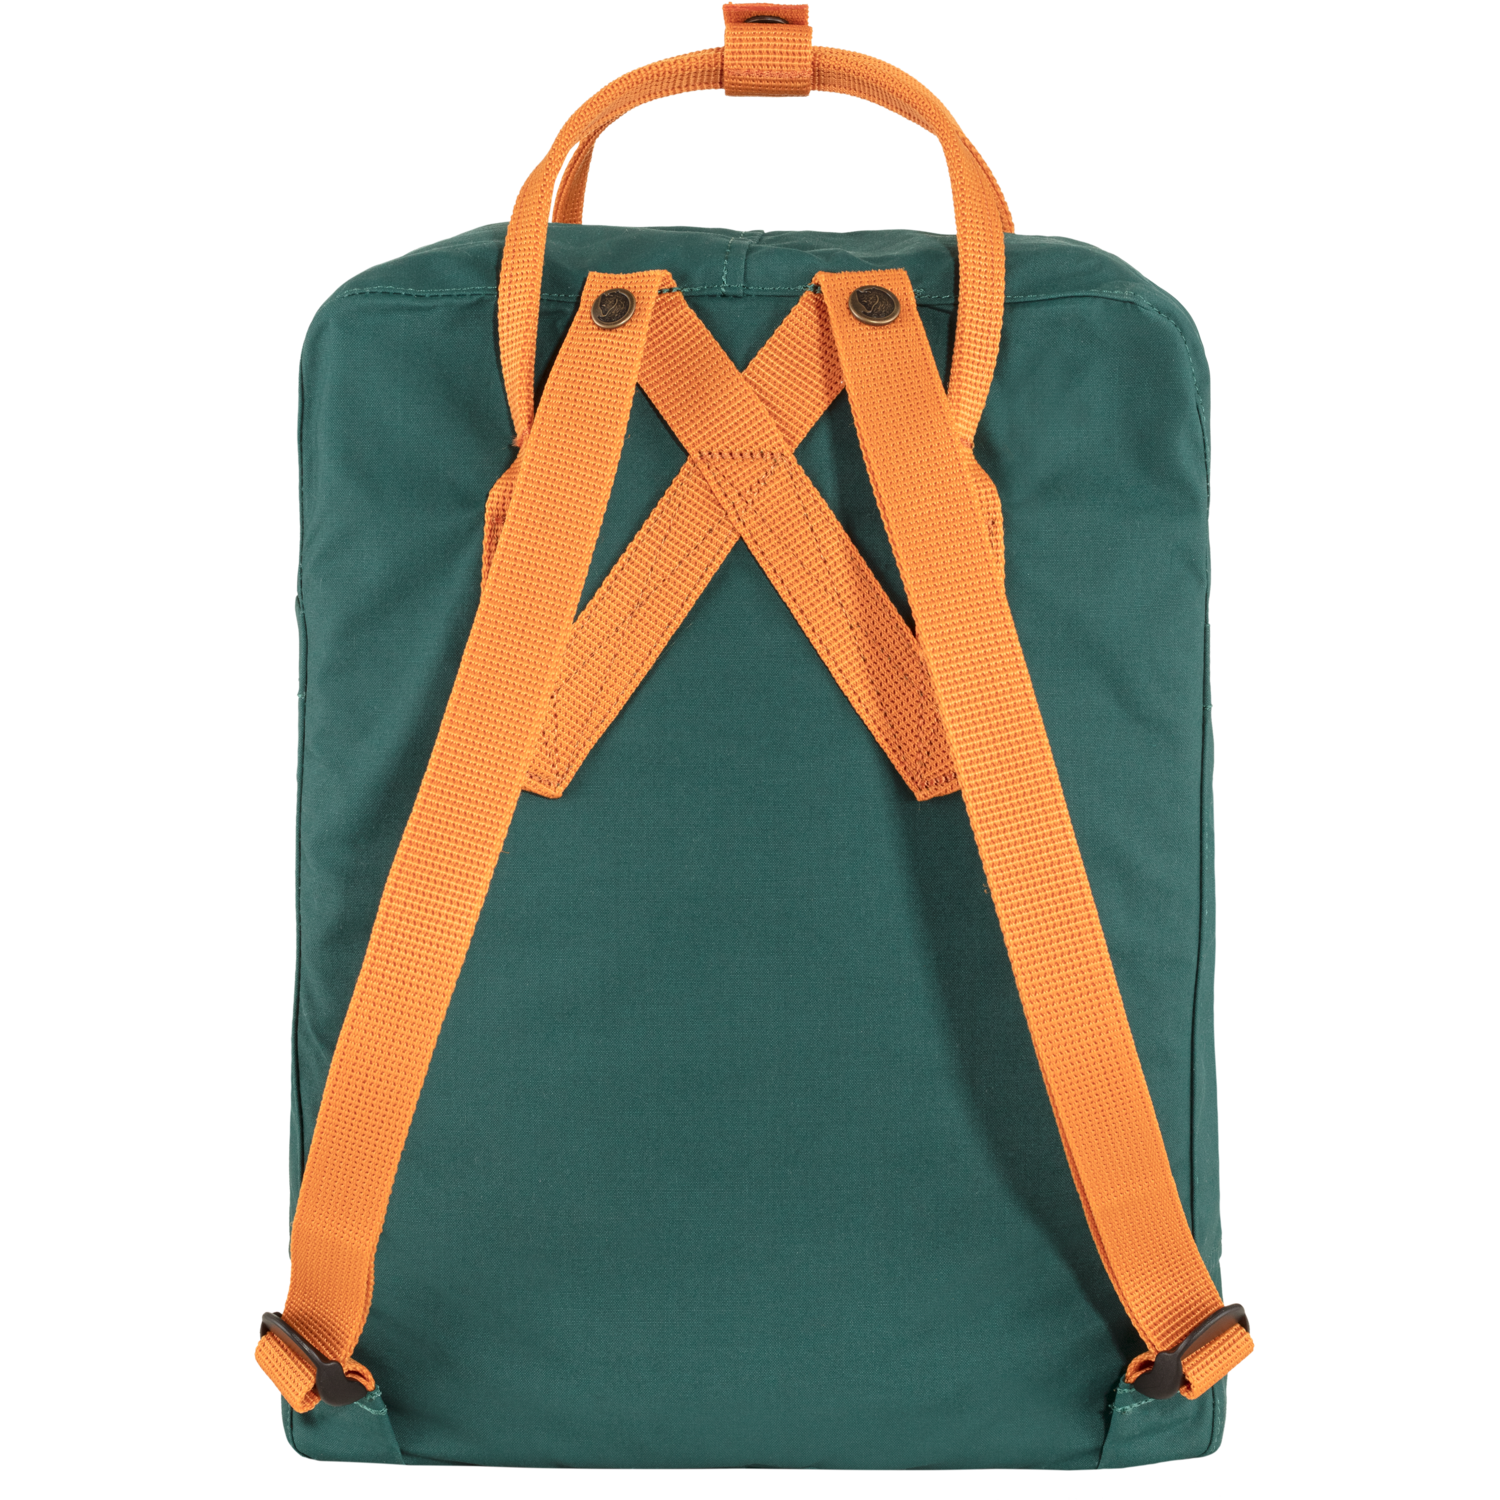 stylish green kanken with orange shoulder straps